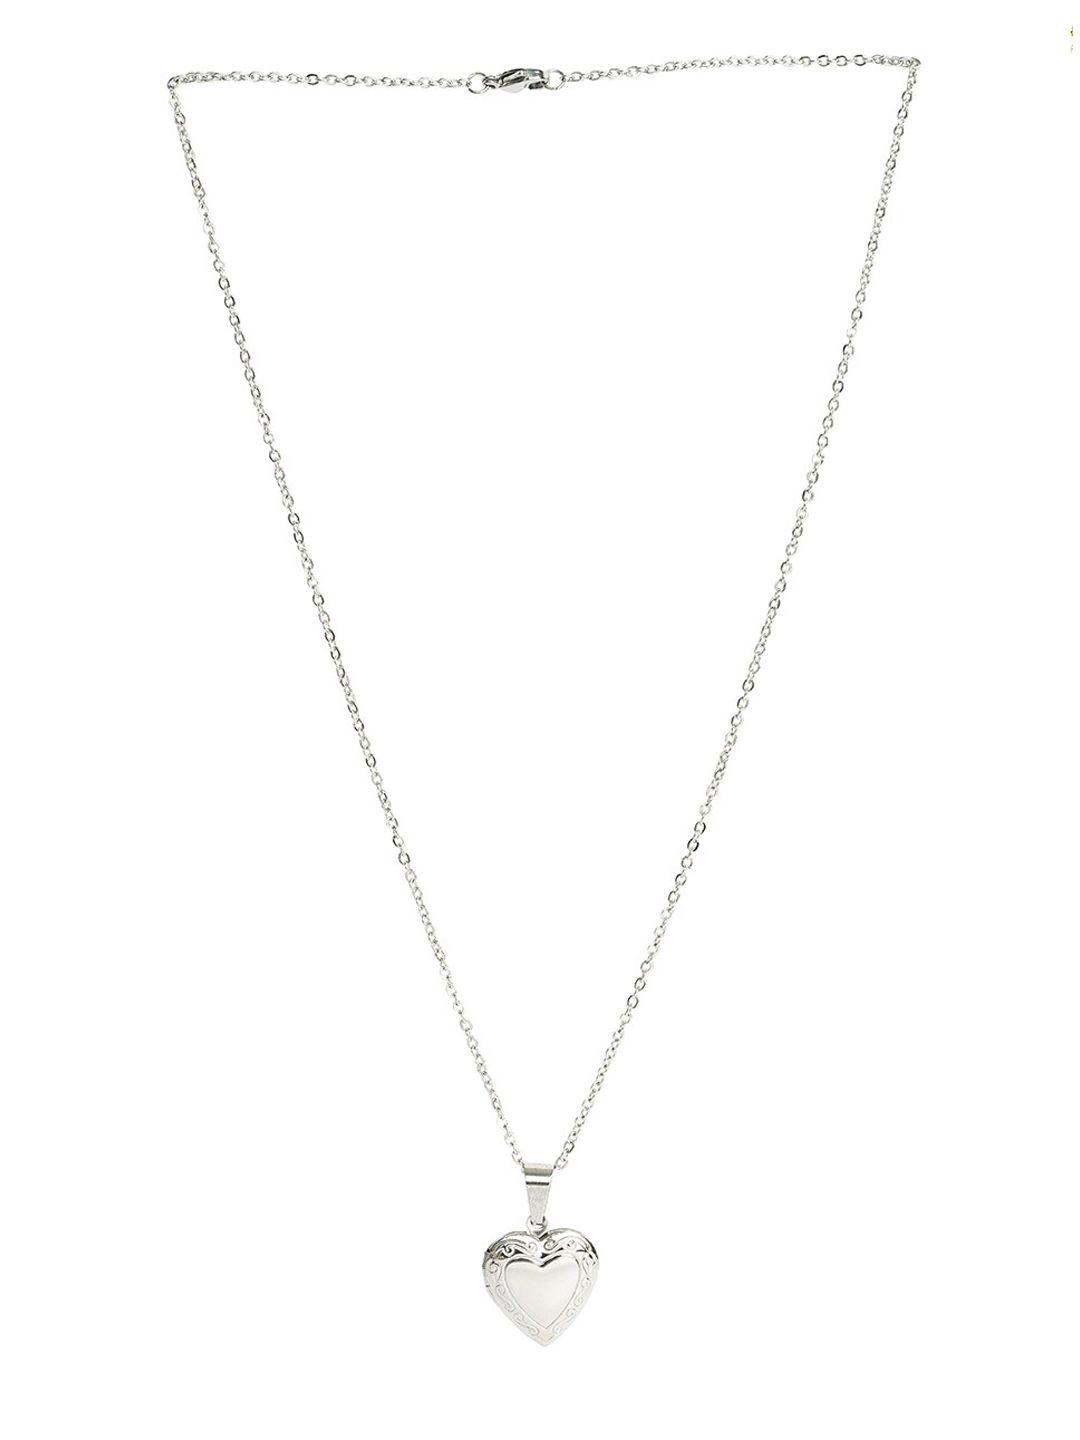 palmonas pendant with necklace